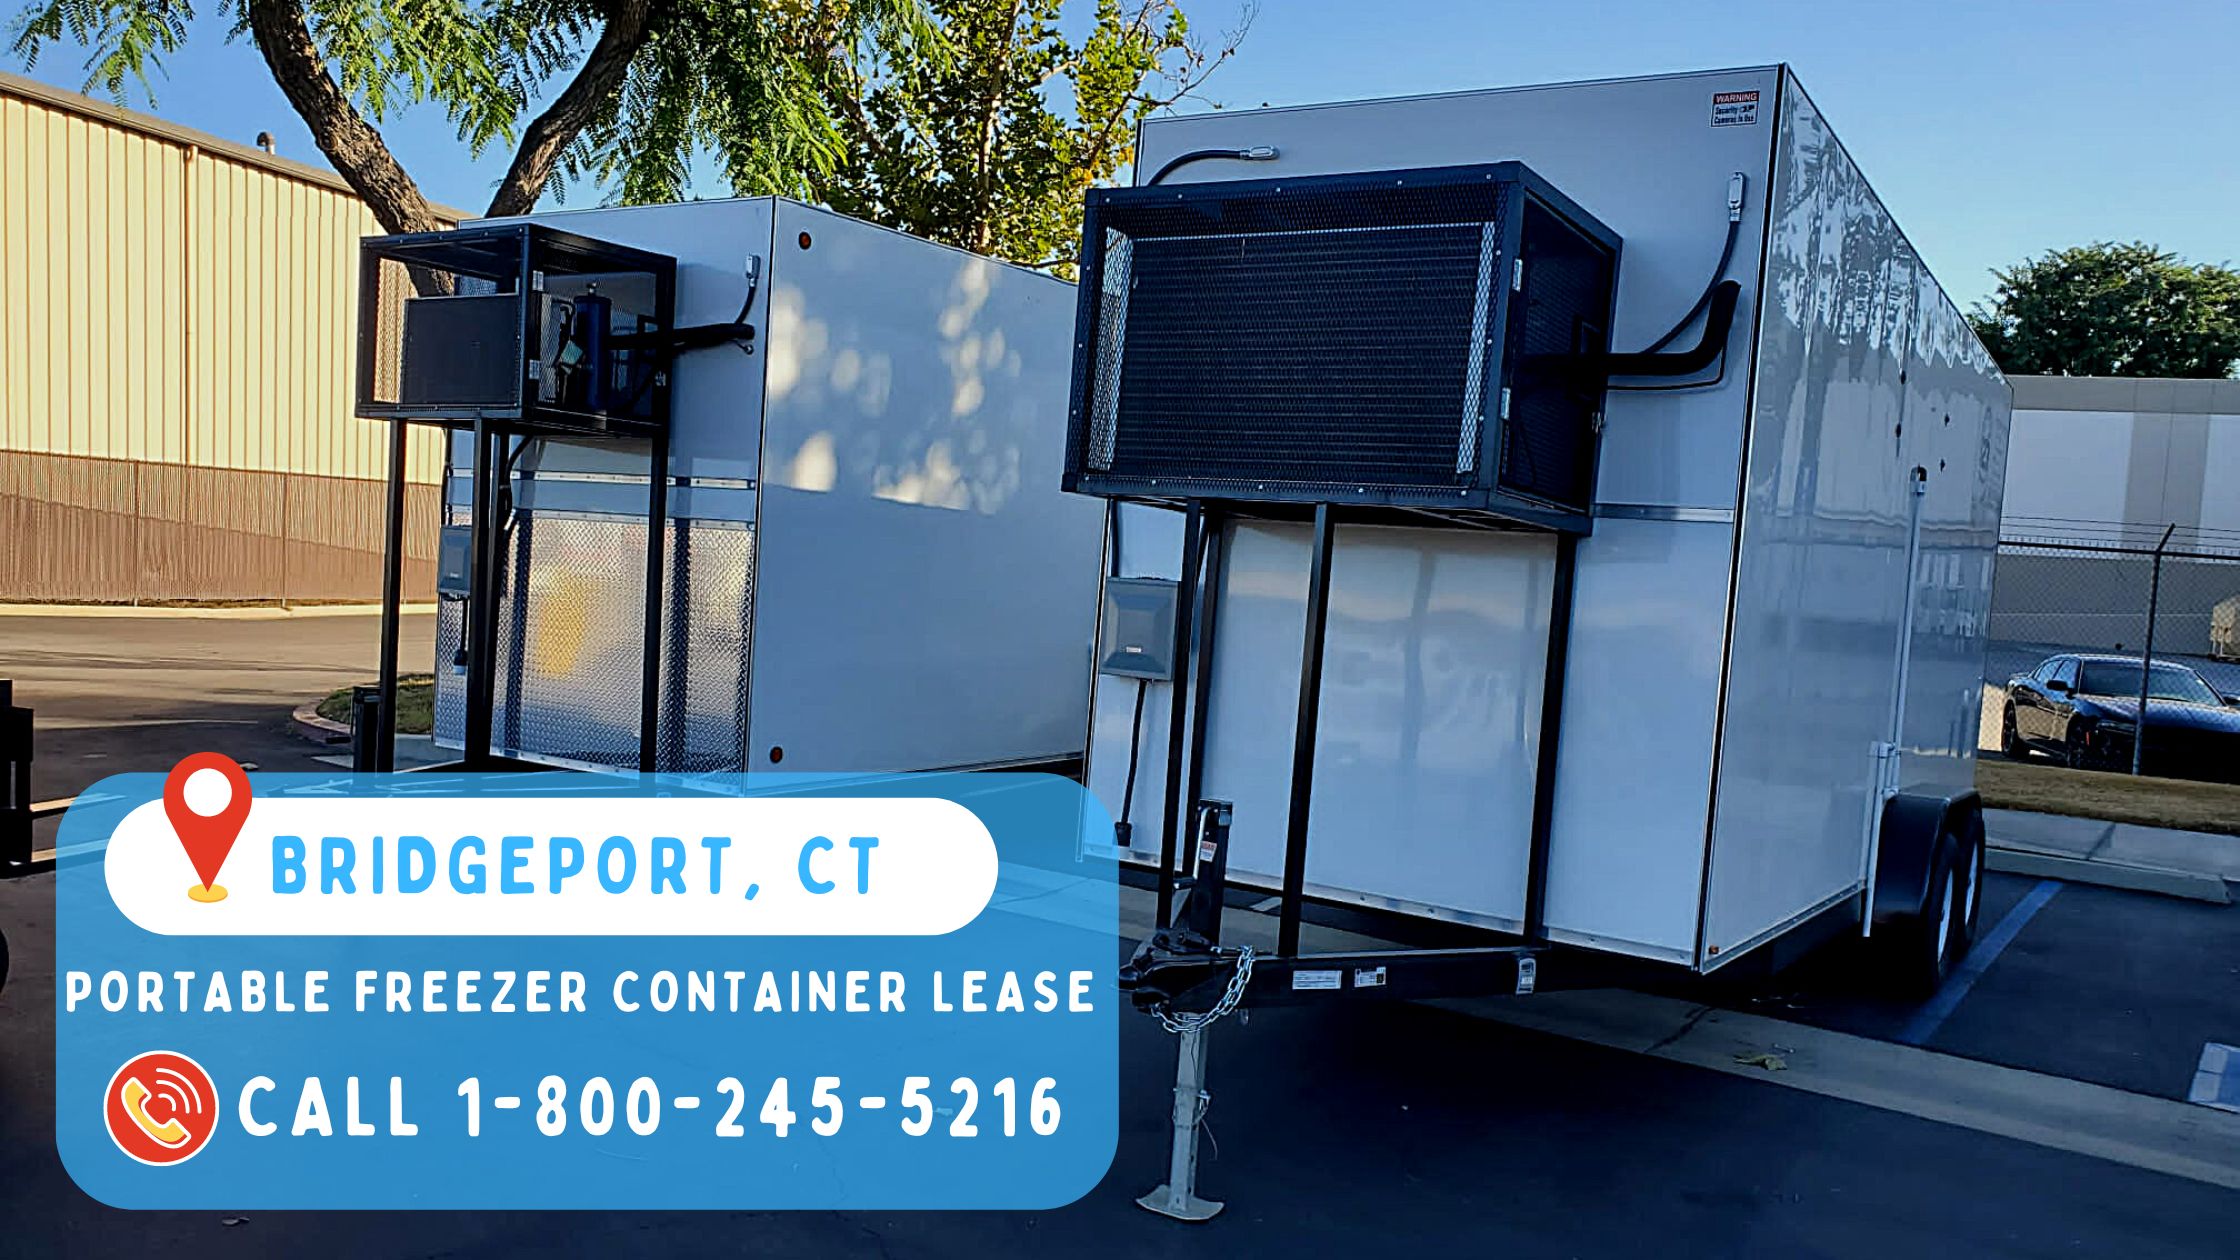 Portable Freezer Container Lease in Bridgeport